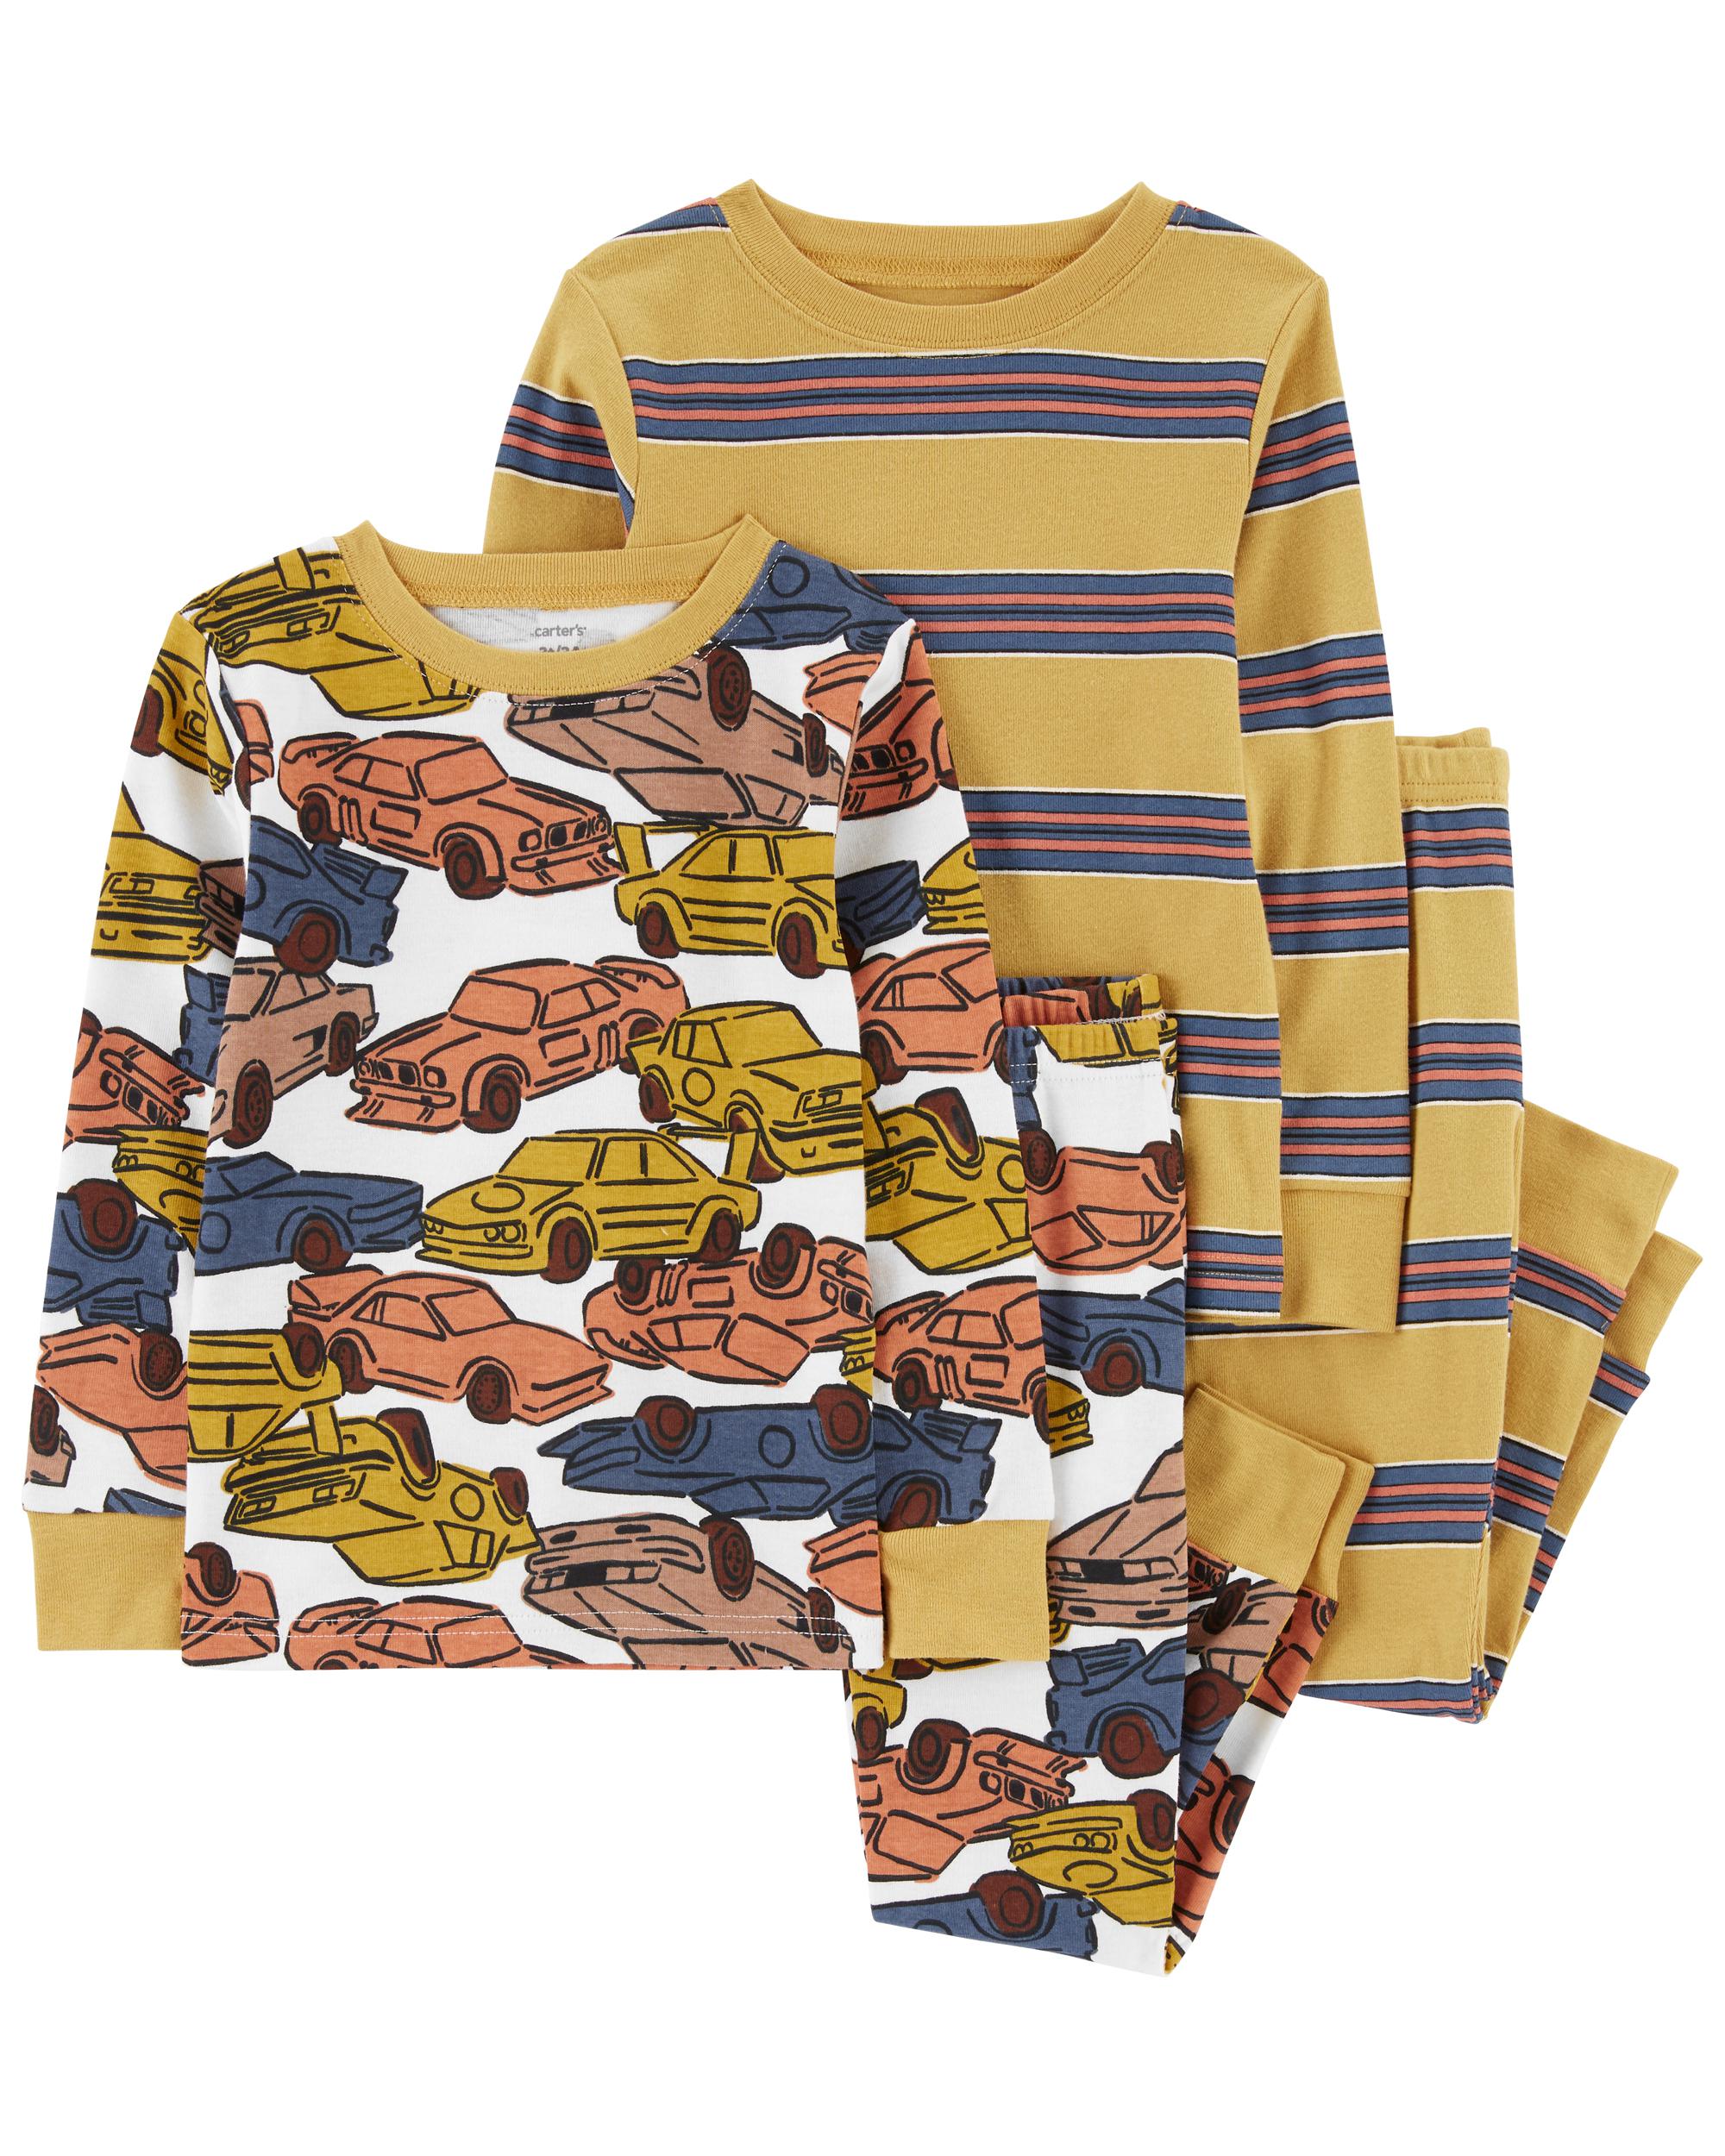 Classic Stripes Pajama Shirt Matching Set 2 pcs Cotton Boys Sleepwear All  Sizes